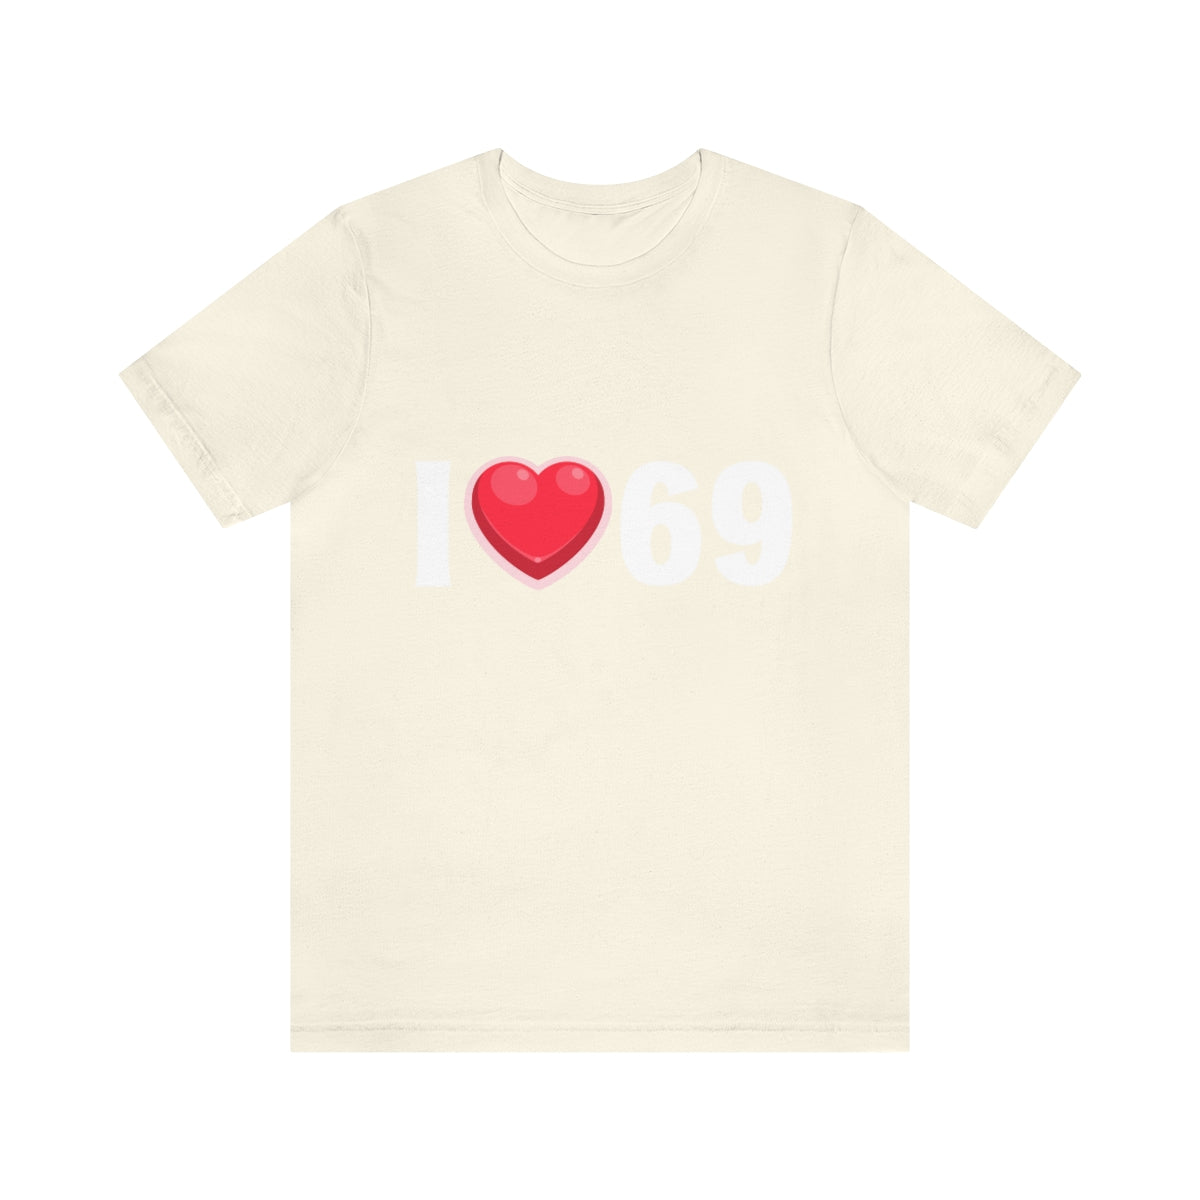 I Heart 69 2 - Unisex T-Shirt